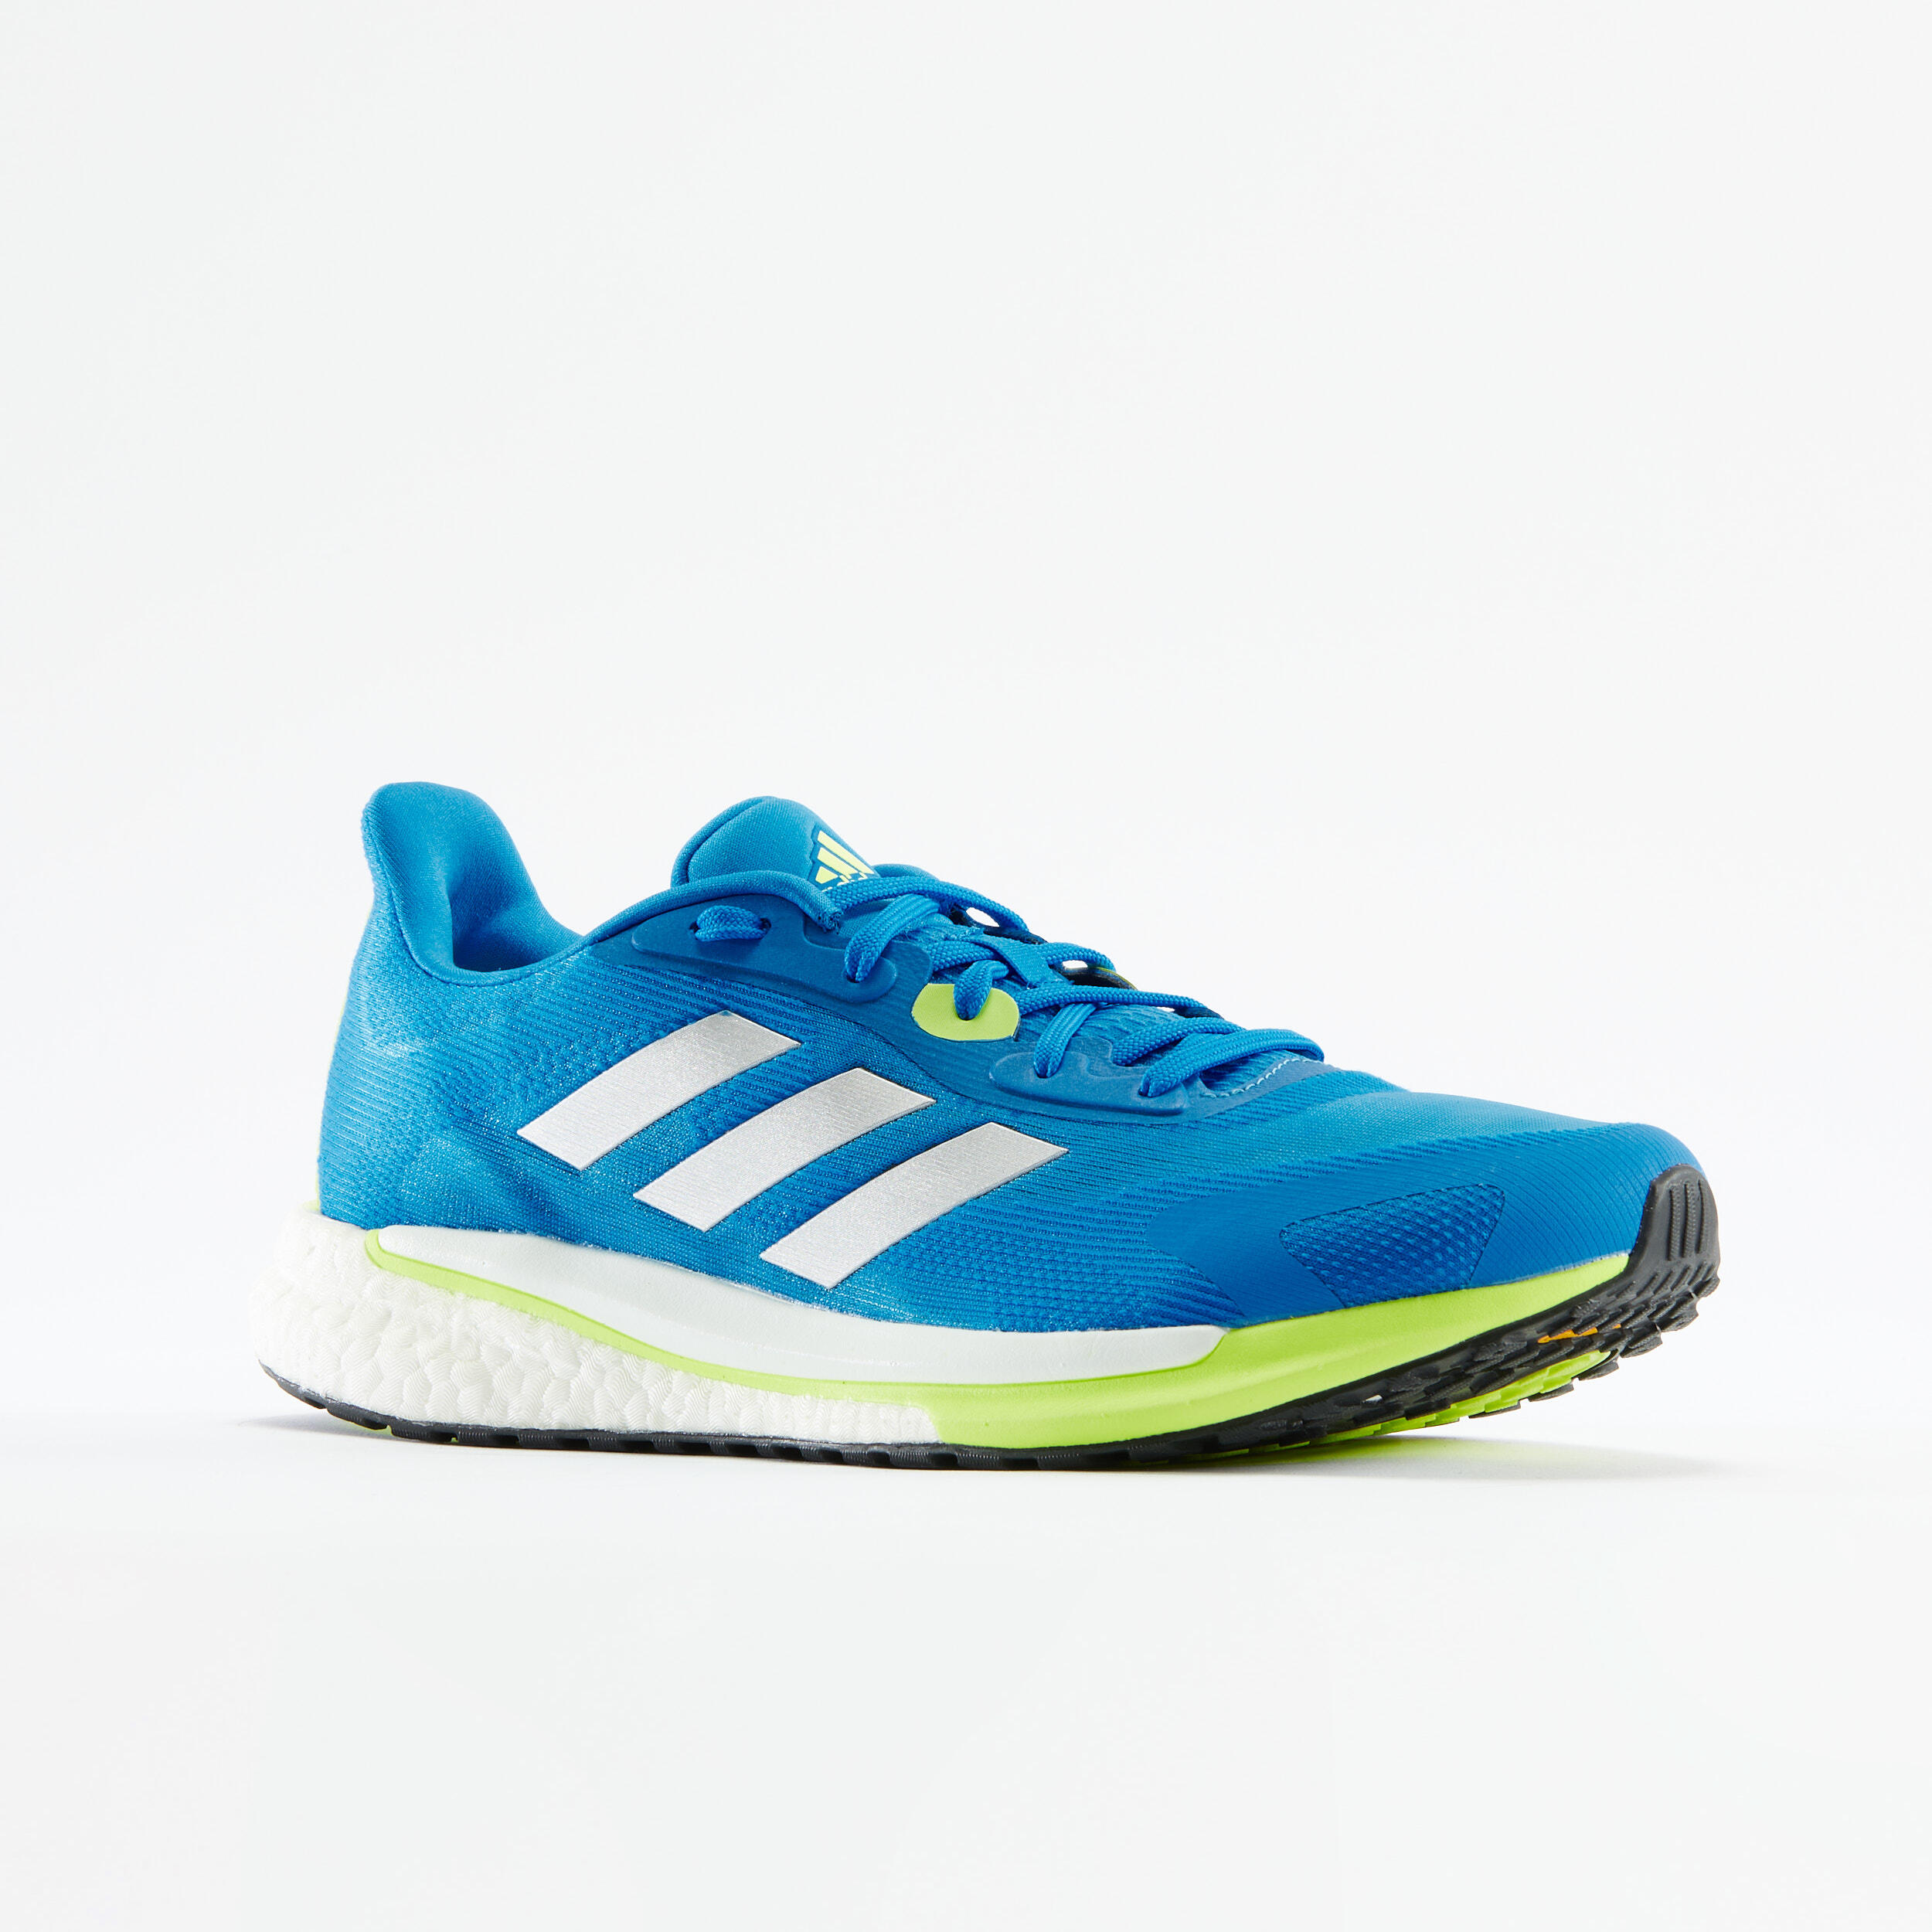 Men's Running Shoes Adidas Supernova Unite - blue yellow 4/8